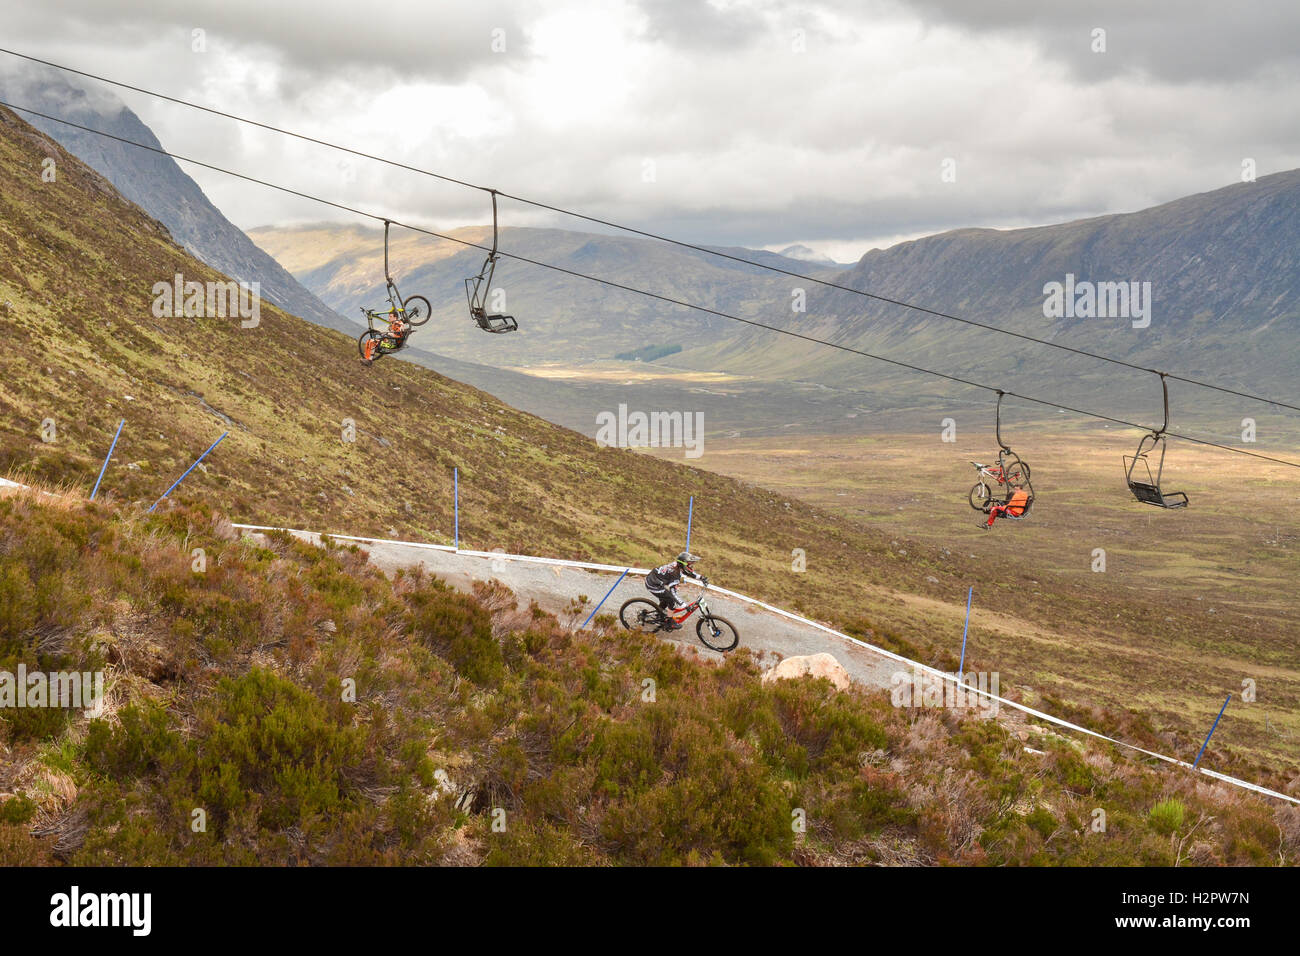 Glen Coe Glencoe Mountain Resort au cours de SDA course vtt de descente, Scotland, UK - Banque D'Images